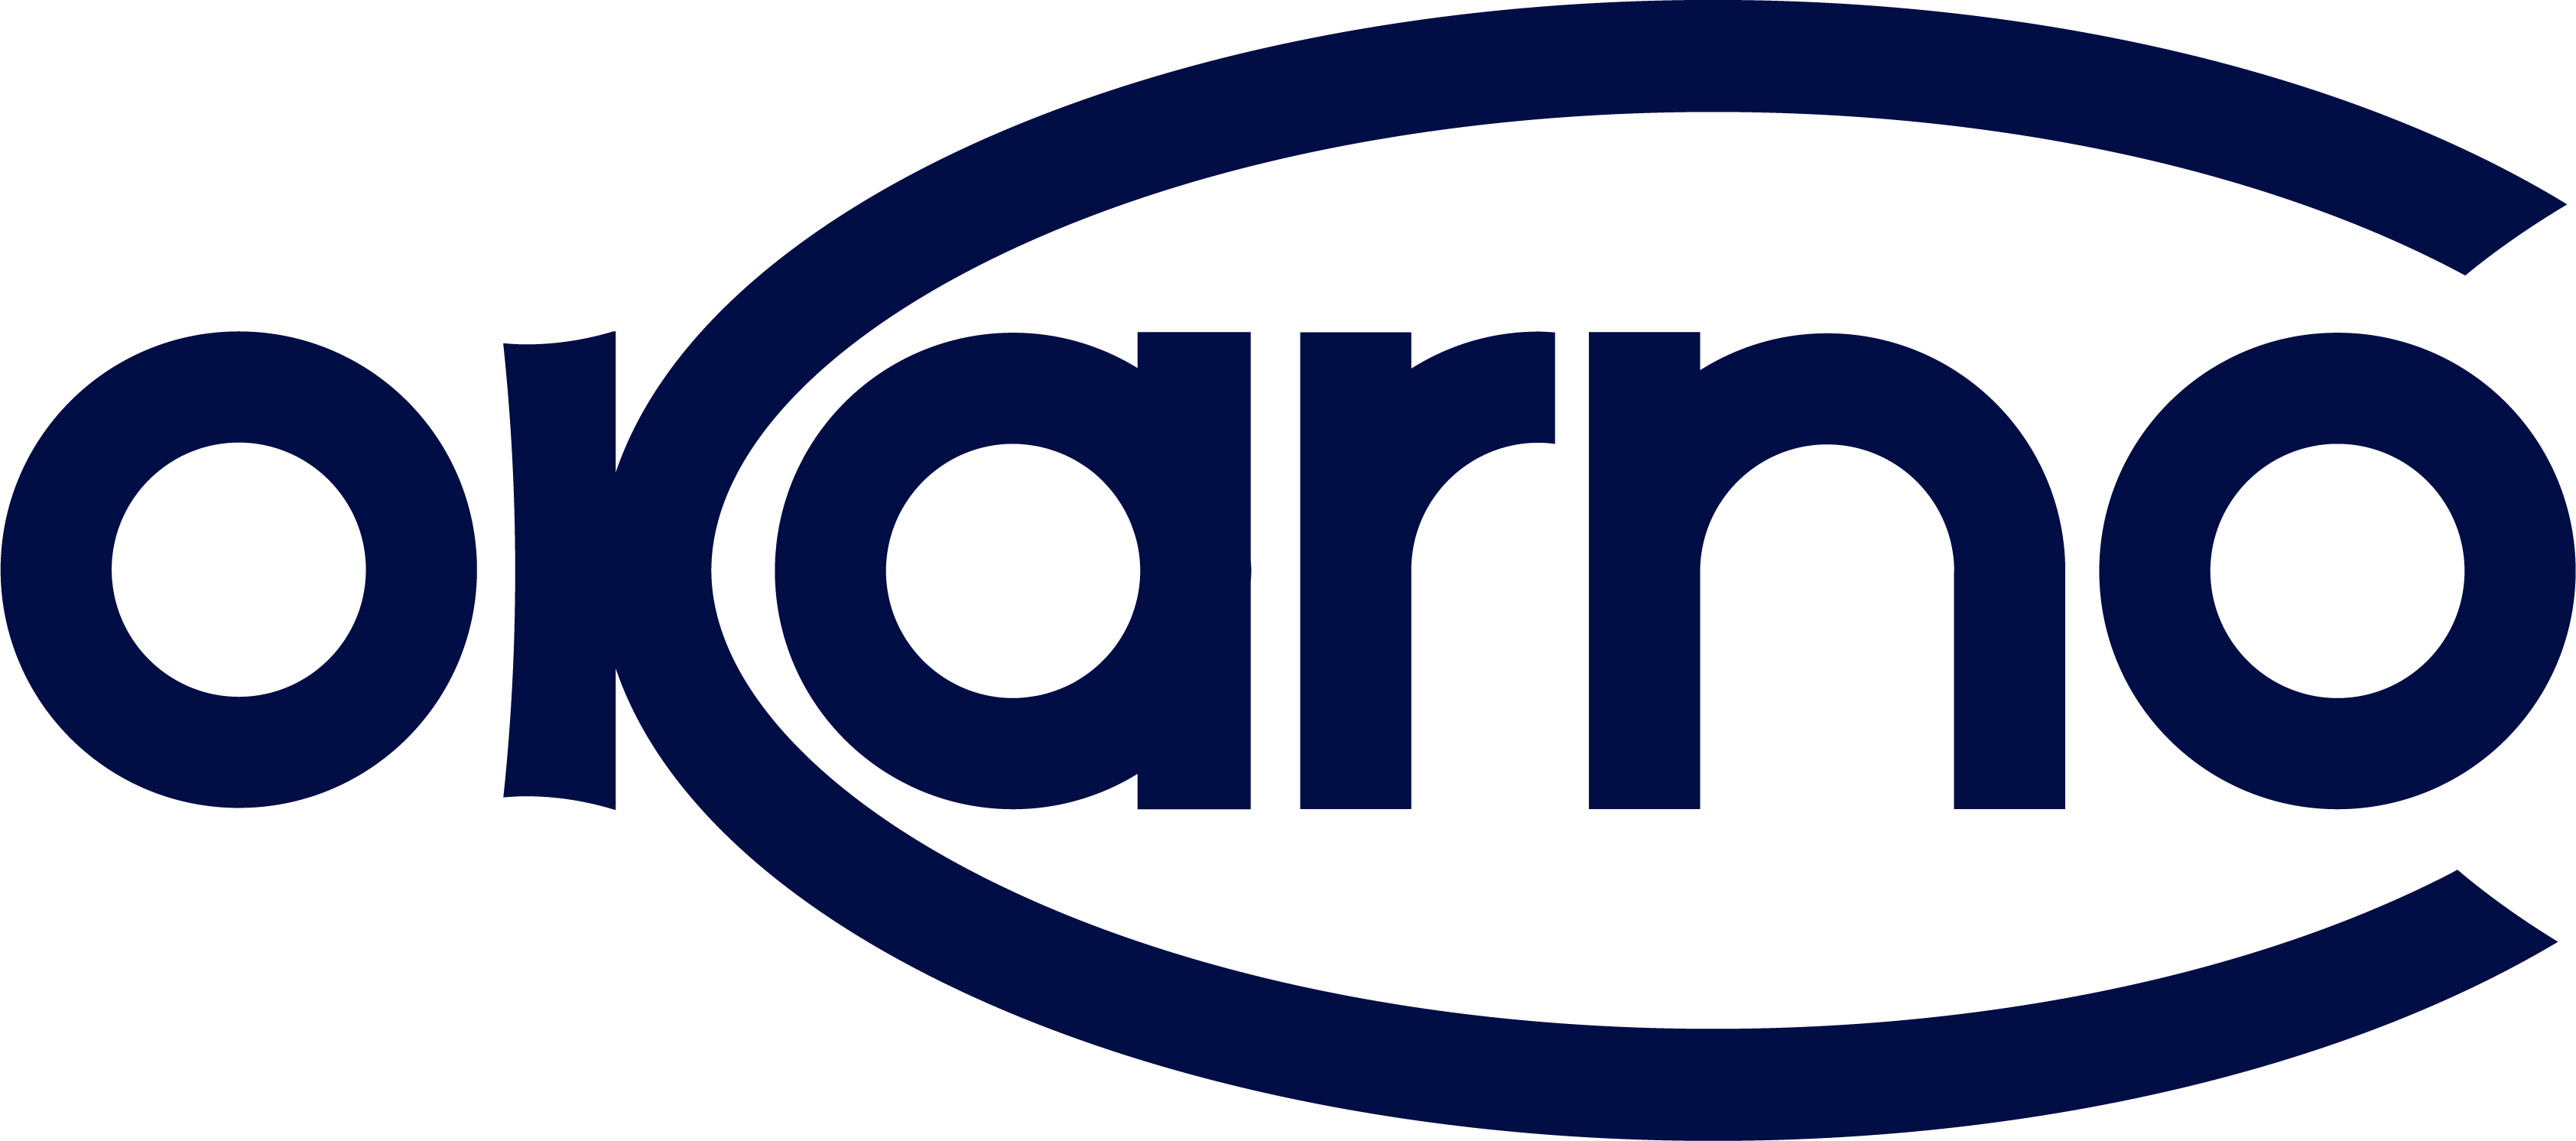 Okarno(Saint-Gobain) Ltd Logo